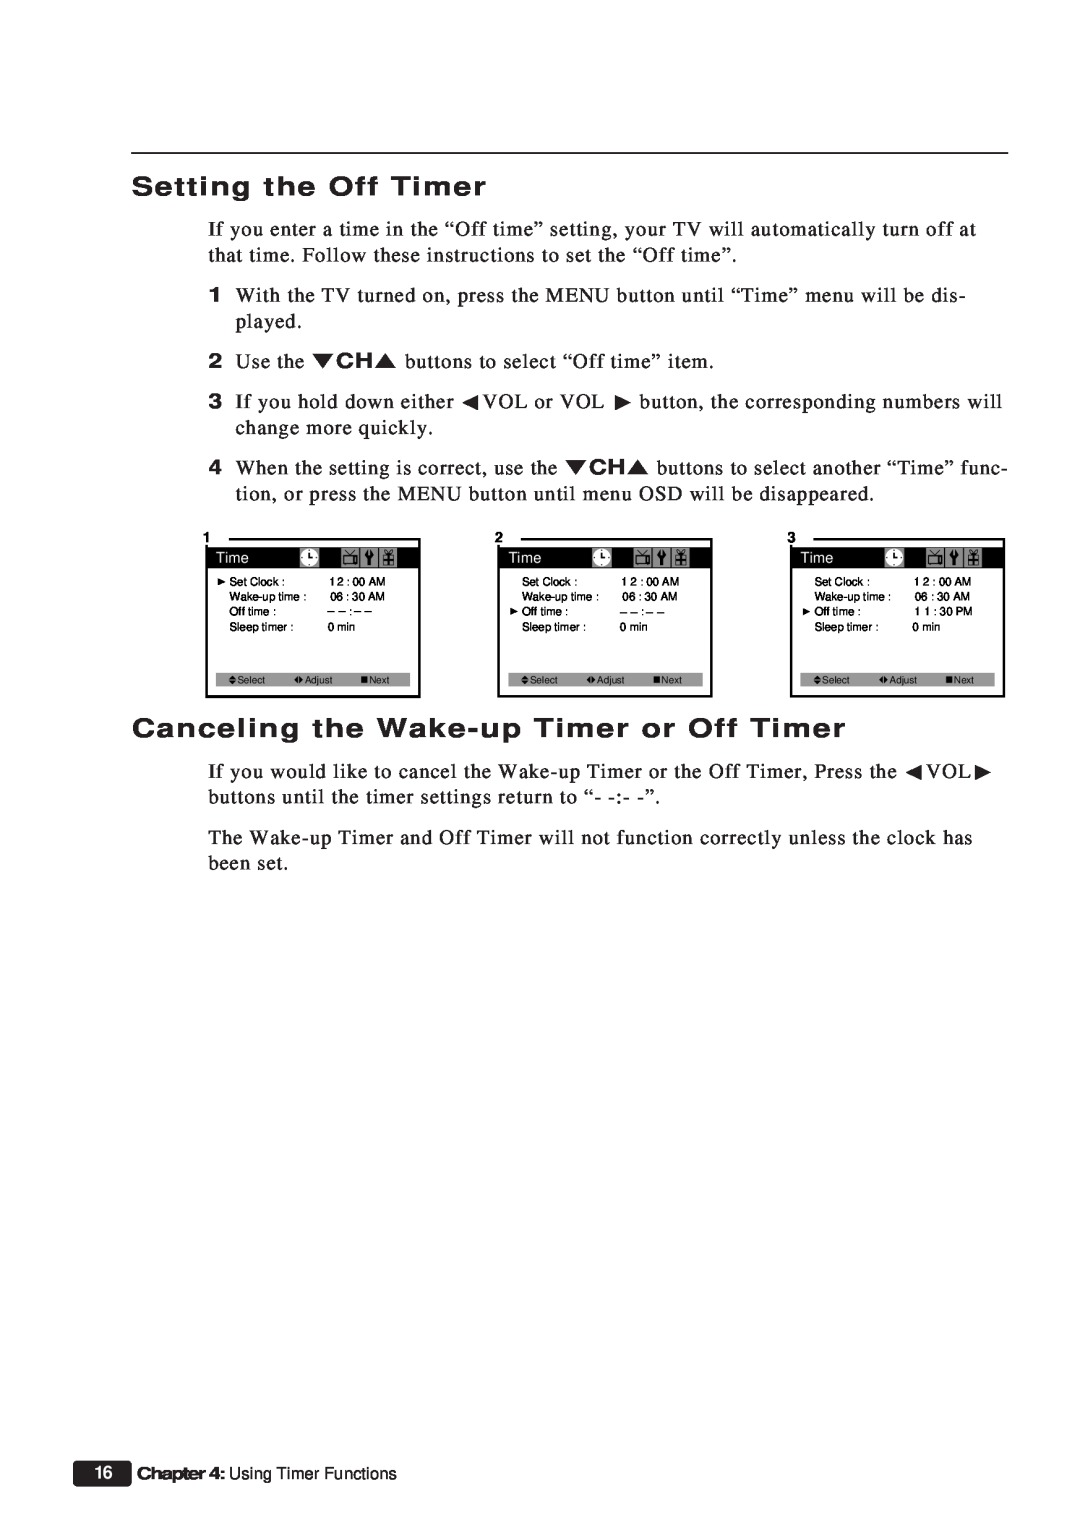 Daewoo ET 13P2, ET 19P2 Setting the Off Timer, Canceling the Wake-up Timer or Off Timer, Using Timer Functions 